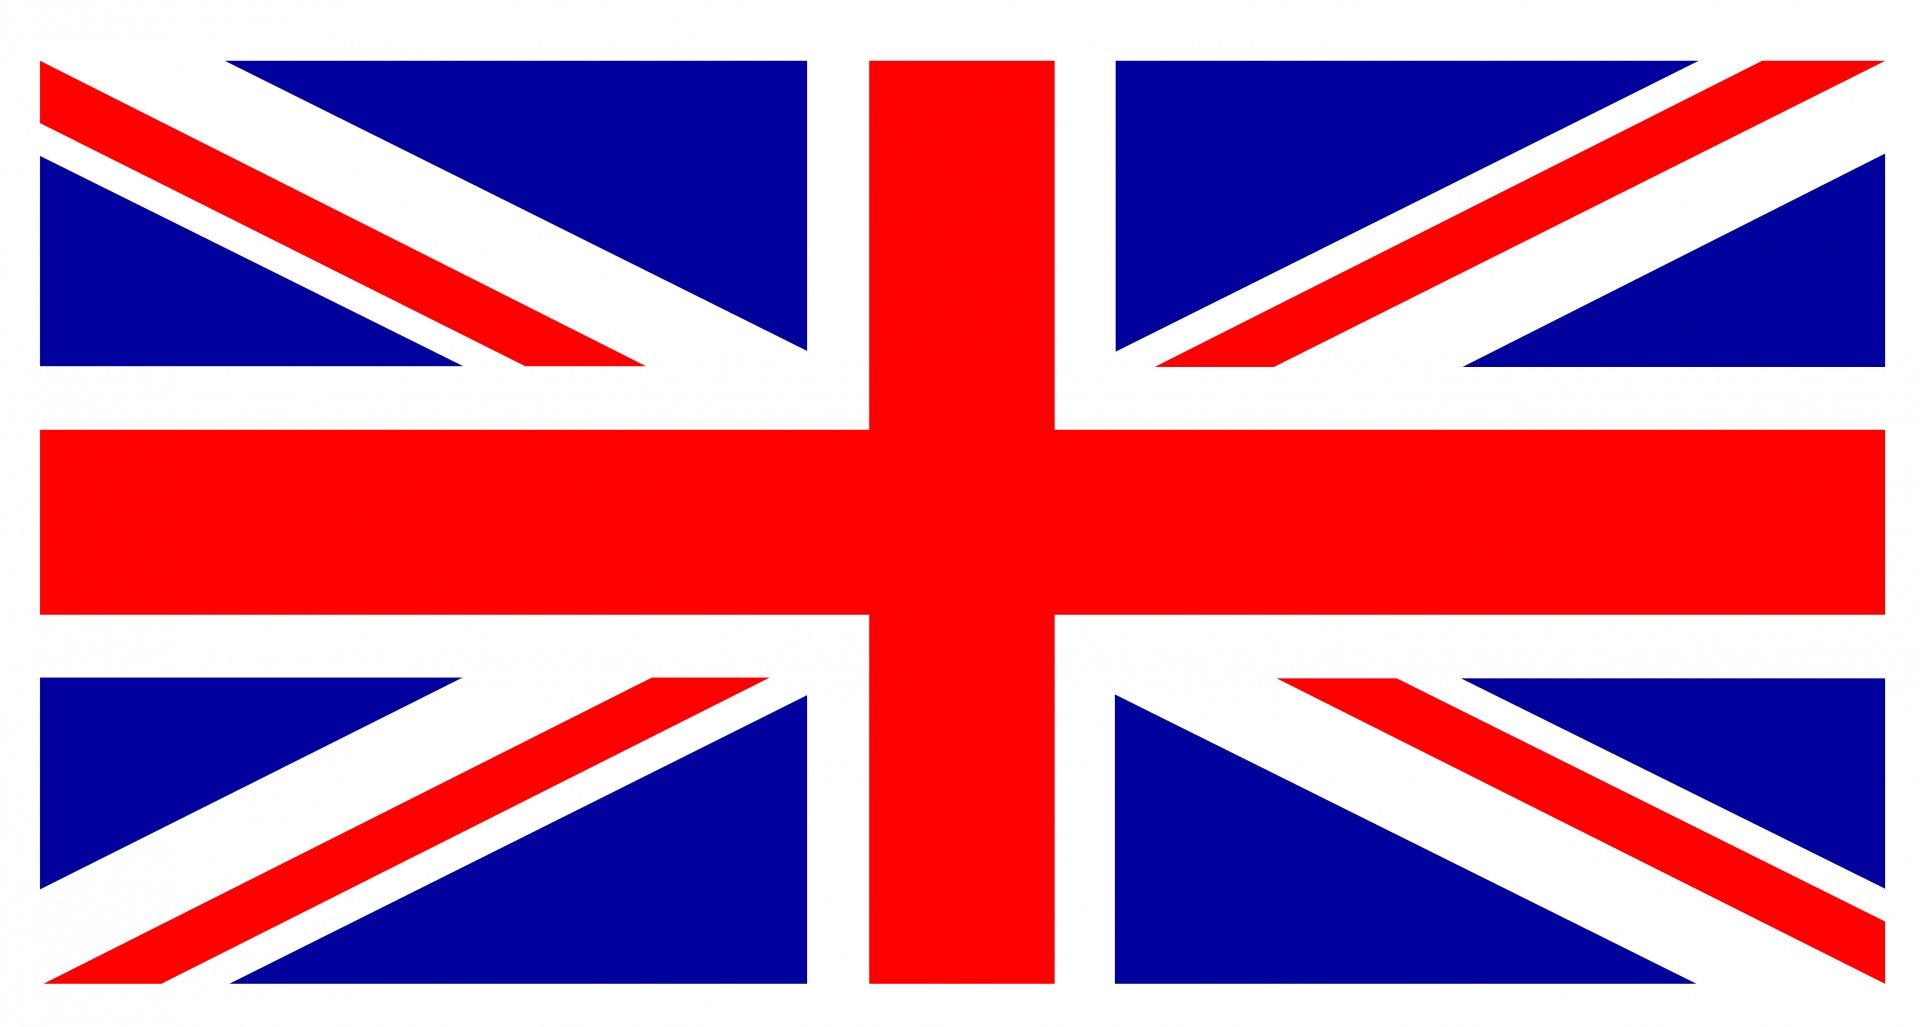 Union Jack Flag Union Jack Flag Colors England Free Image From Needpix Com